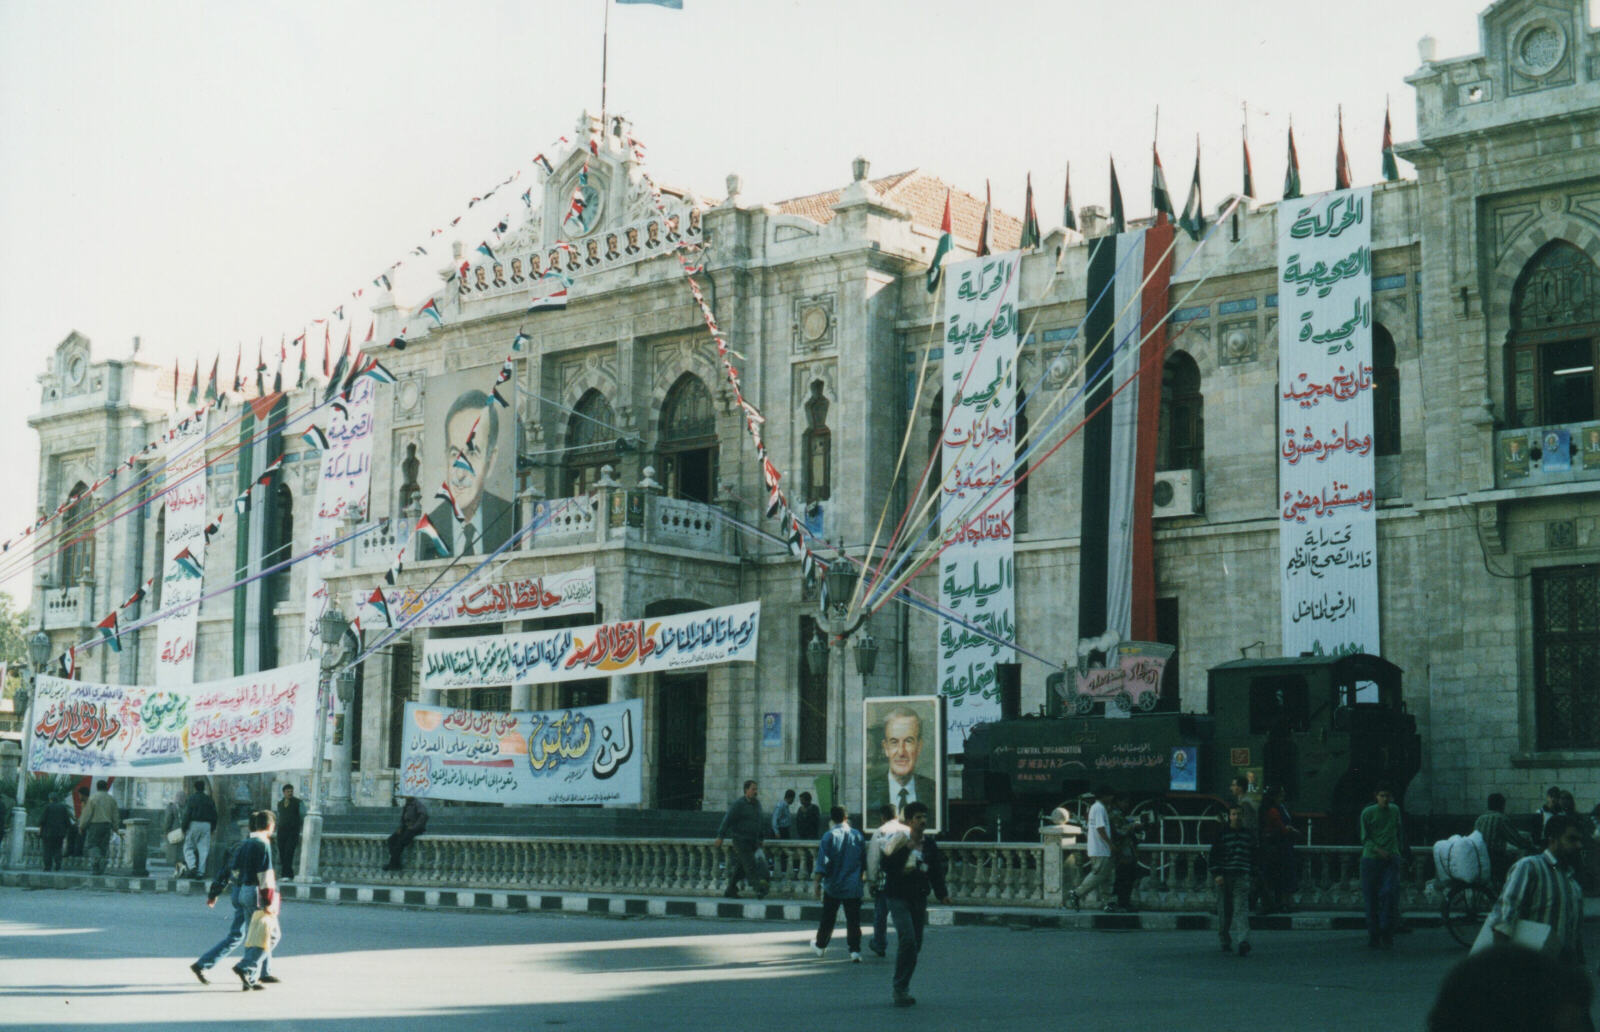 The Hijaz railway station in Damascus